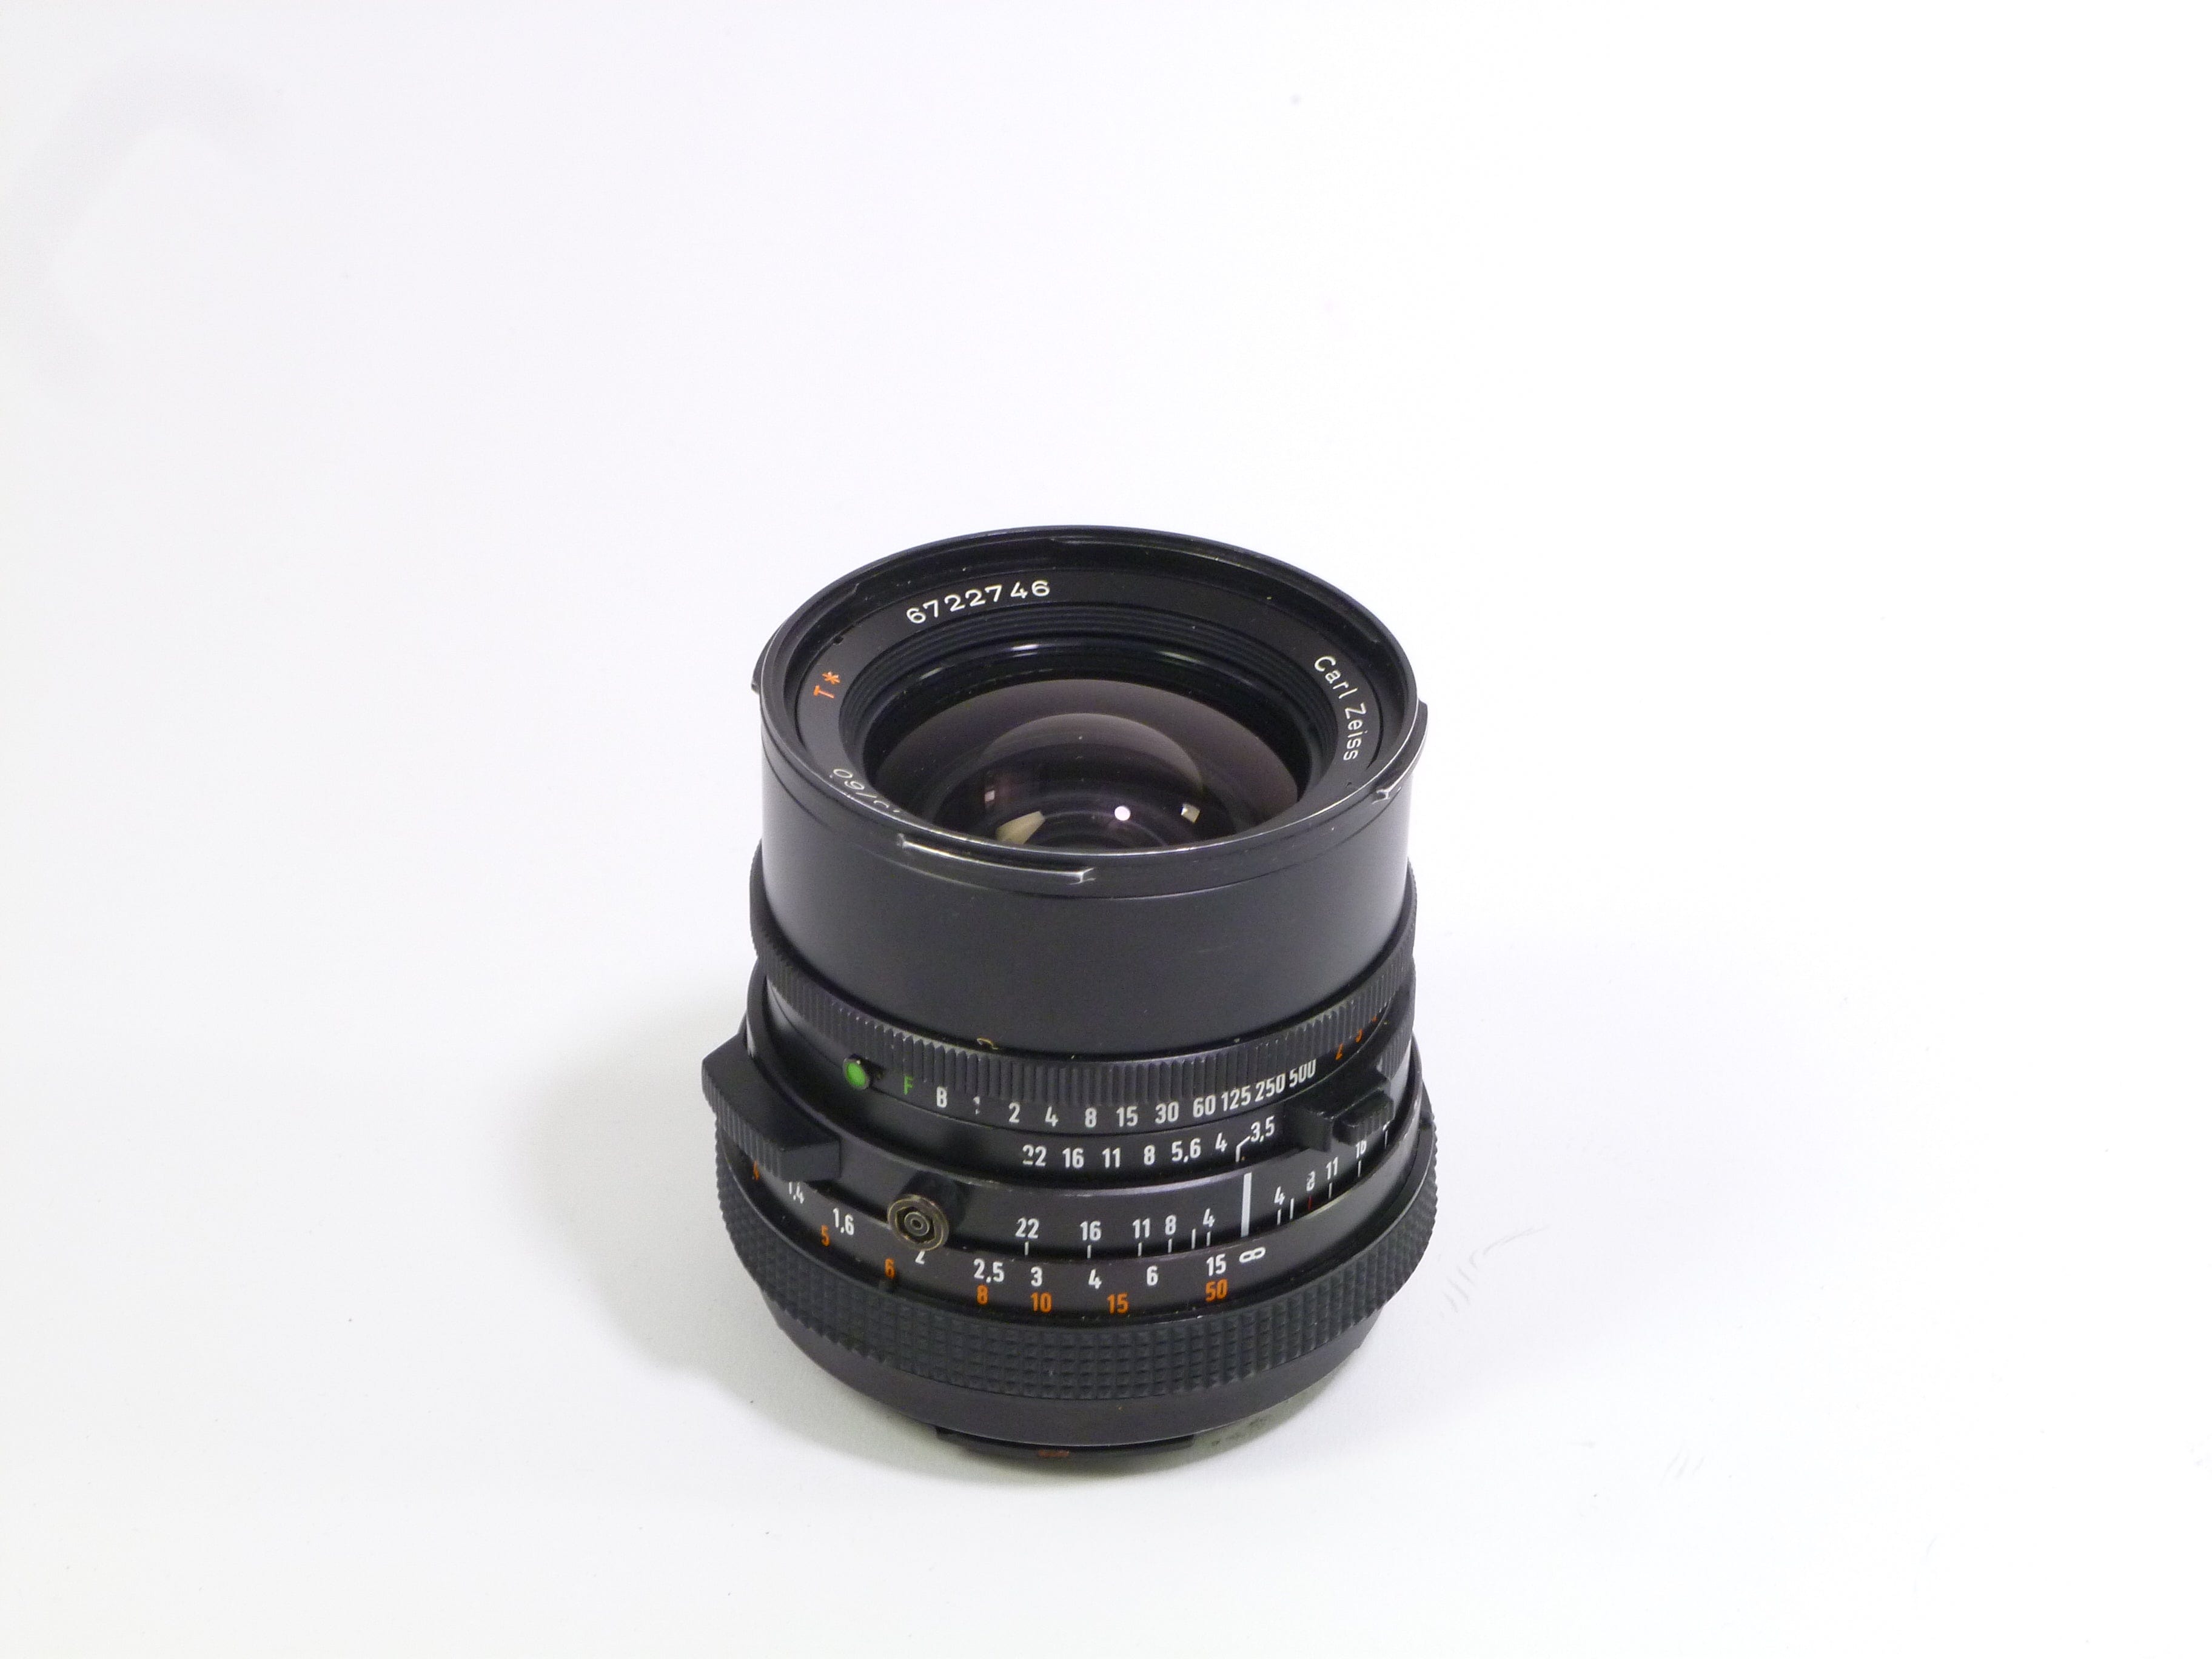 Carl Zeiss Distagon 60mm f/3.5 T* CF Lens